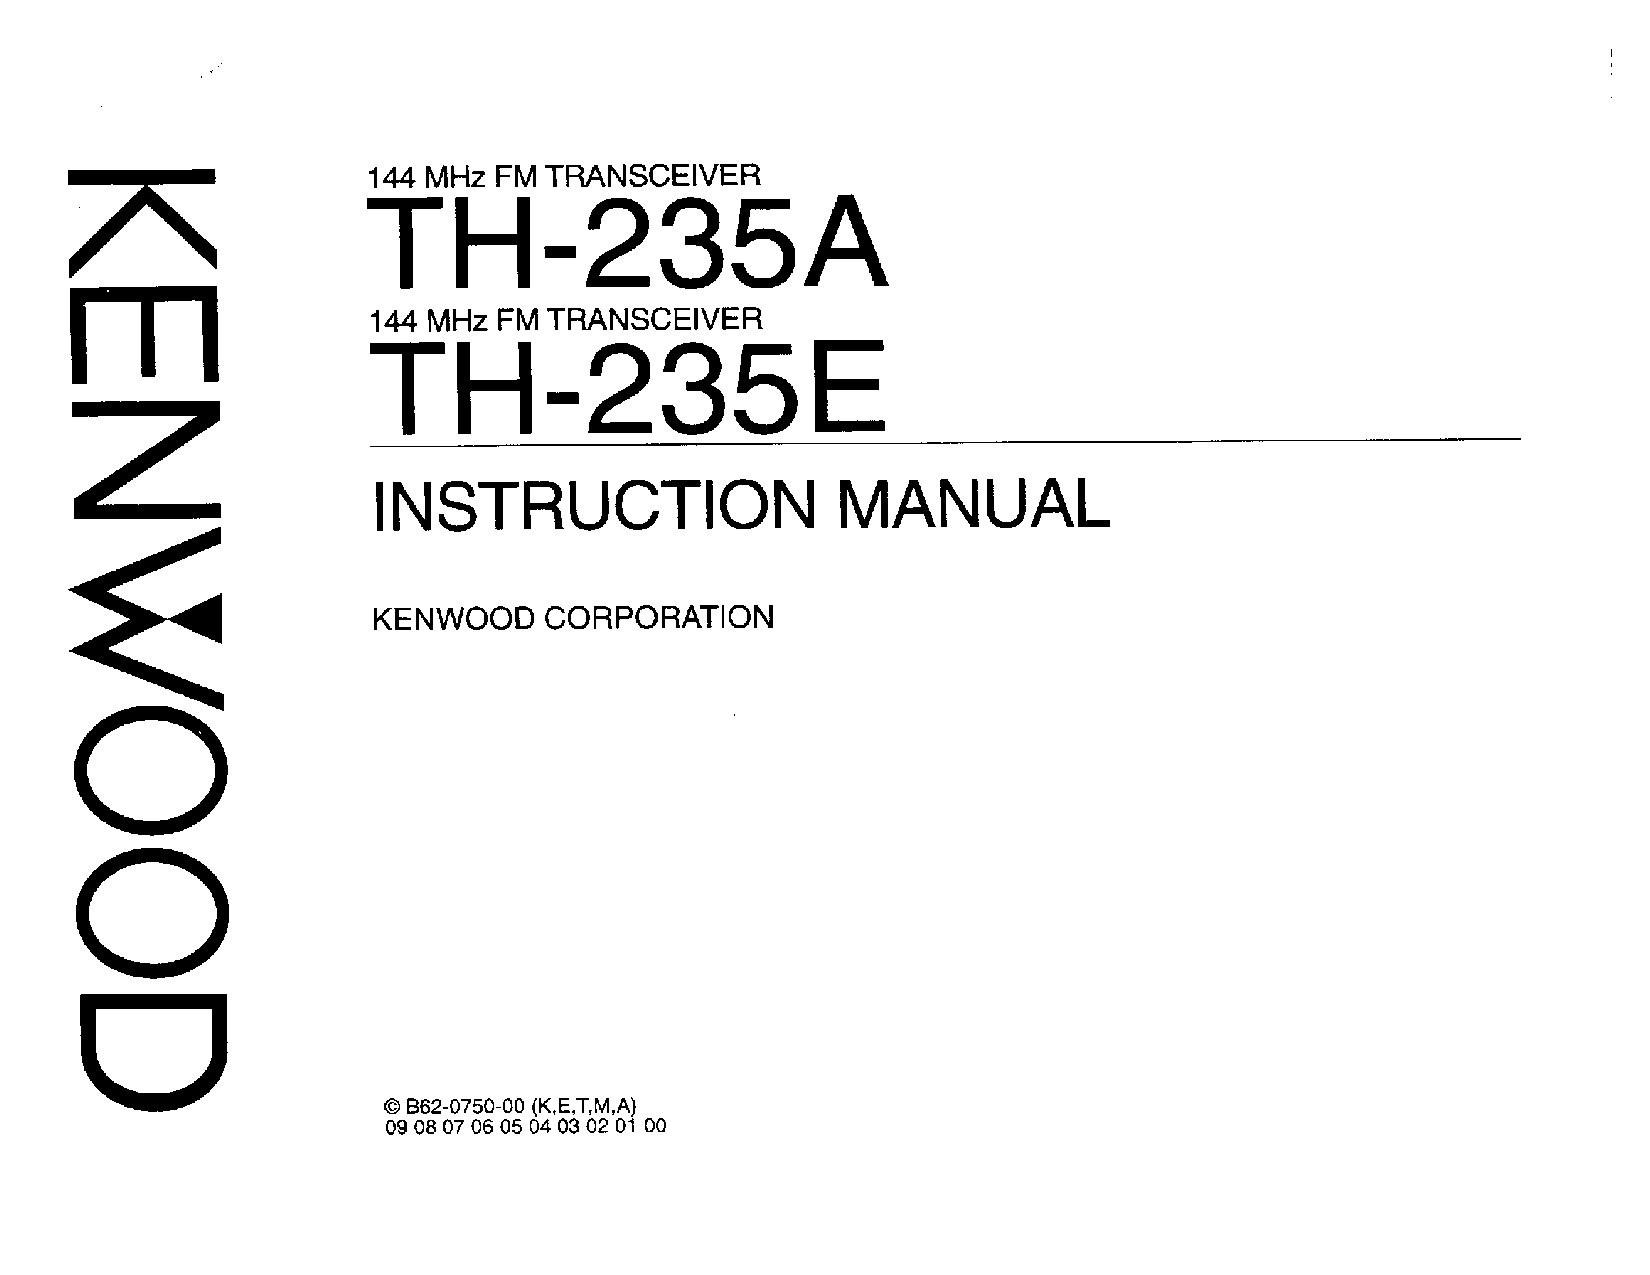 Kenwood TH-235A User Manual